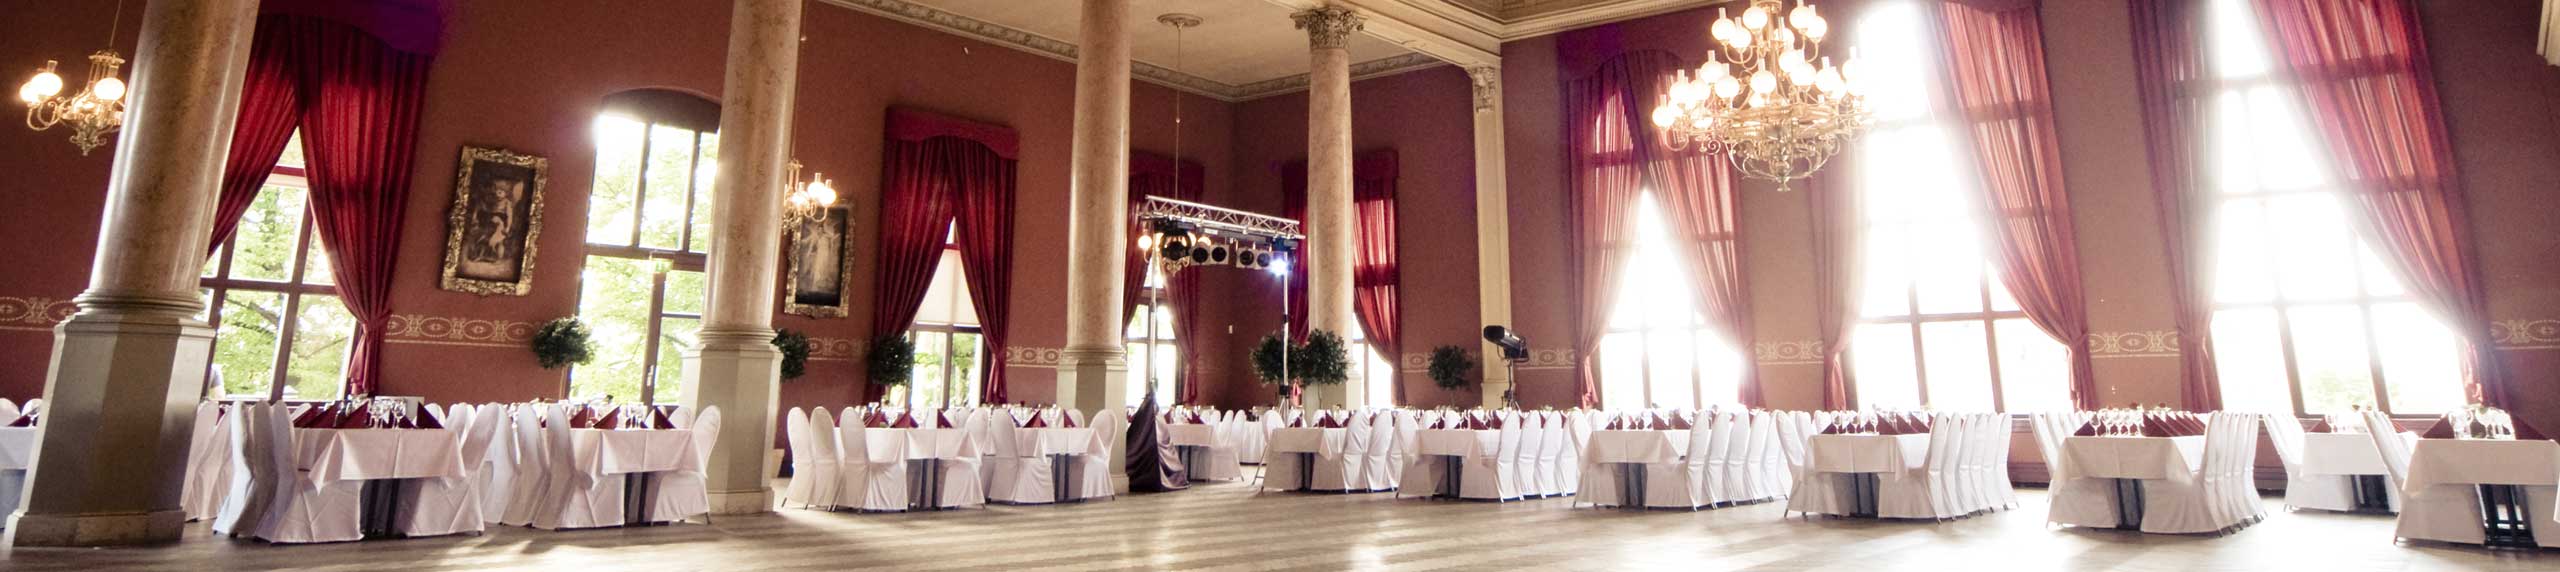 Hausbraeu Watzke - Ballsaal im Watzke Dresden - Heiraten in Dresden